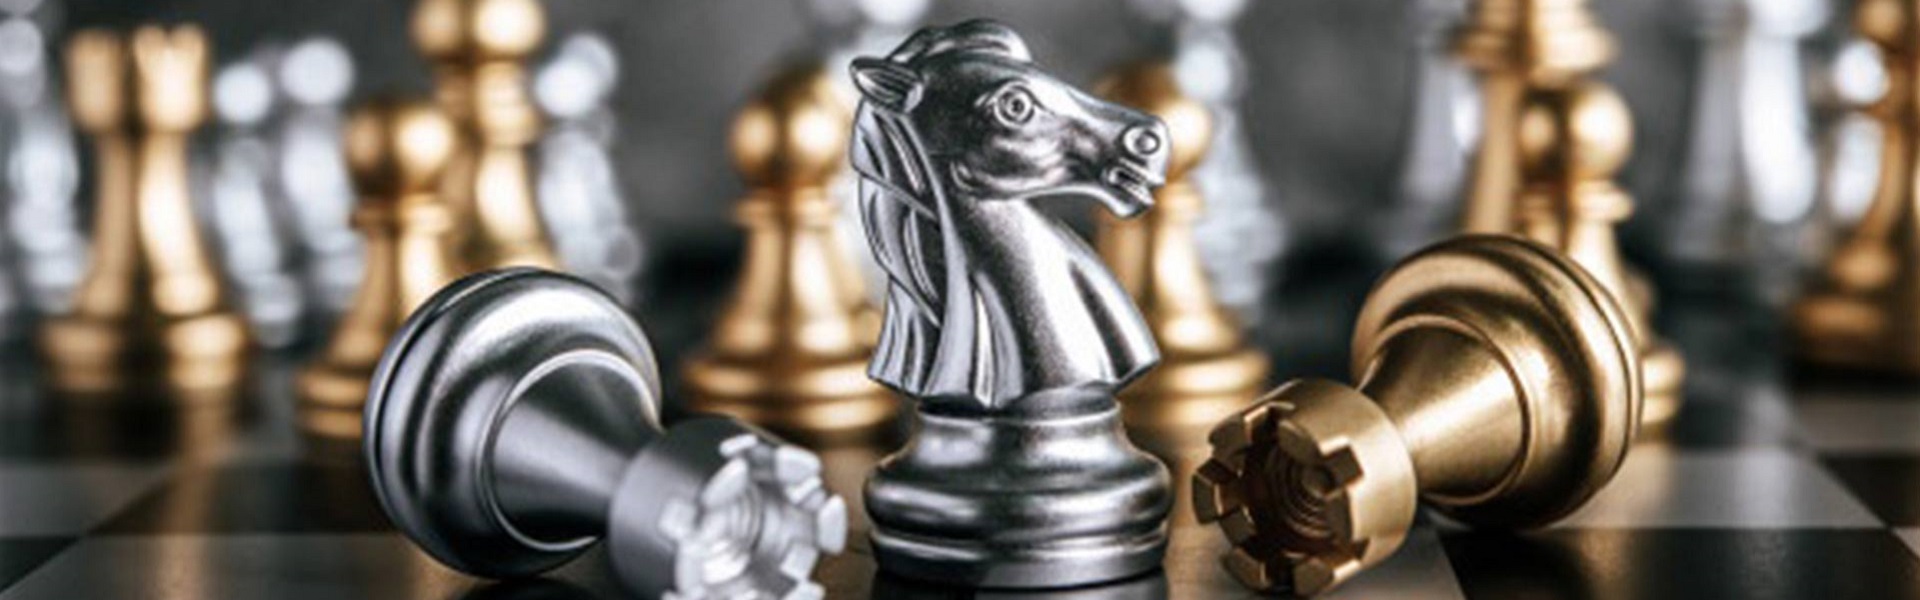 Otkup i reciklaža akumulatora | Chess lessons Dubai & New York